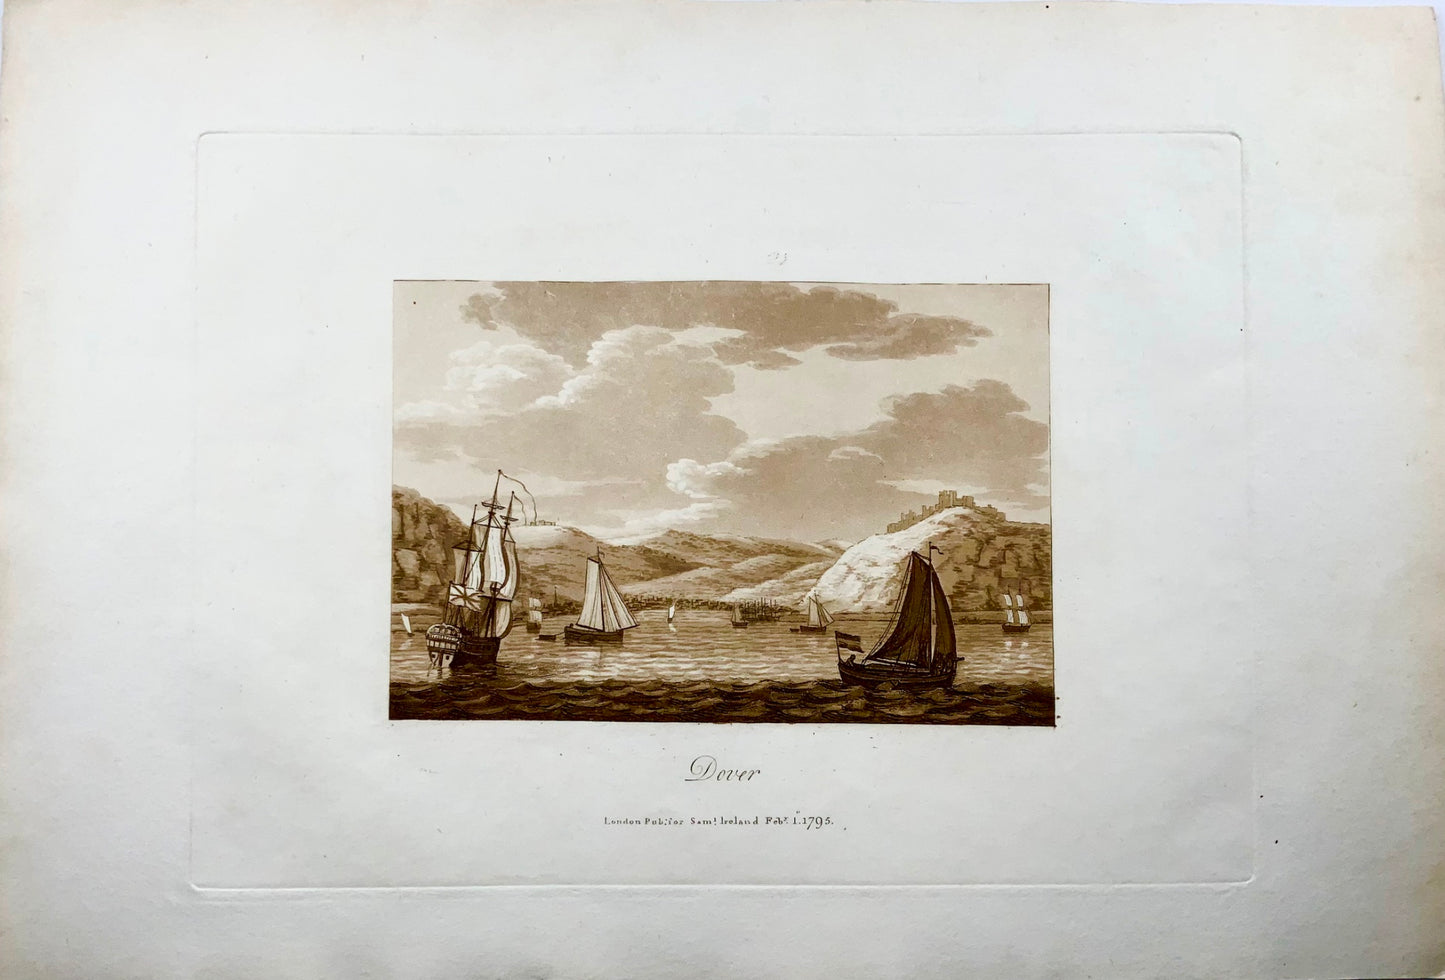 1795 Dover from the Sea, Inghilterra, acquatinta seppia di Sam. Irlanda, carta grande